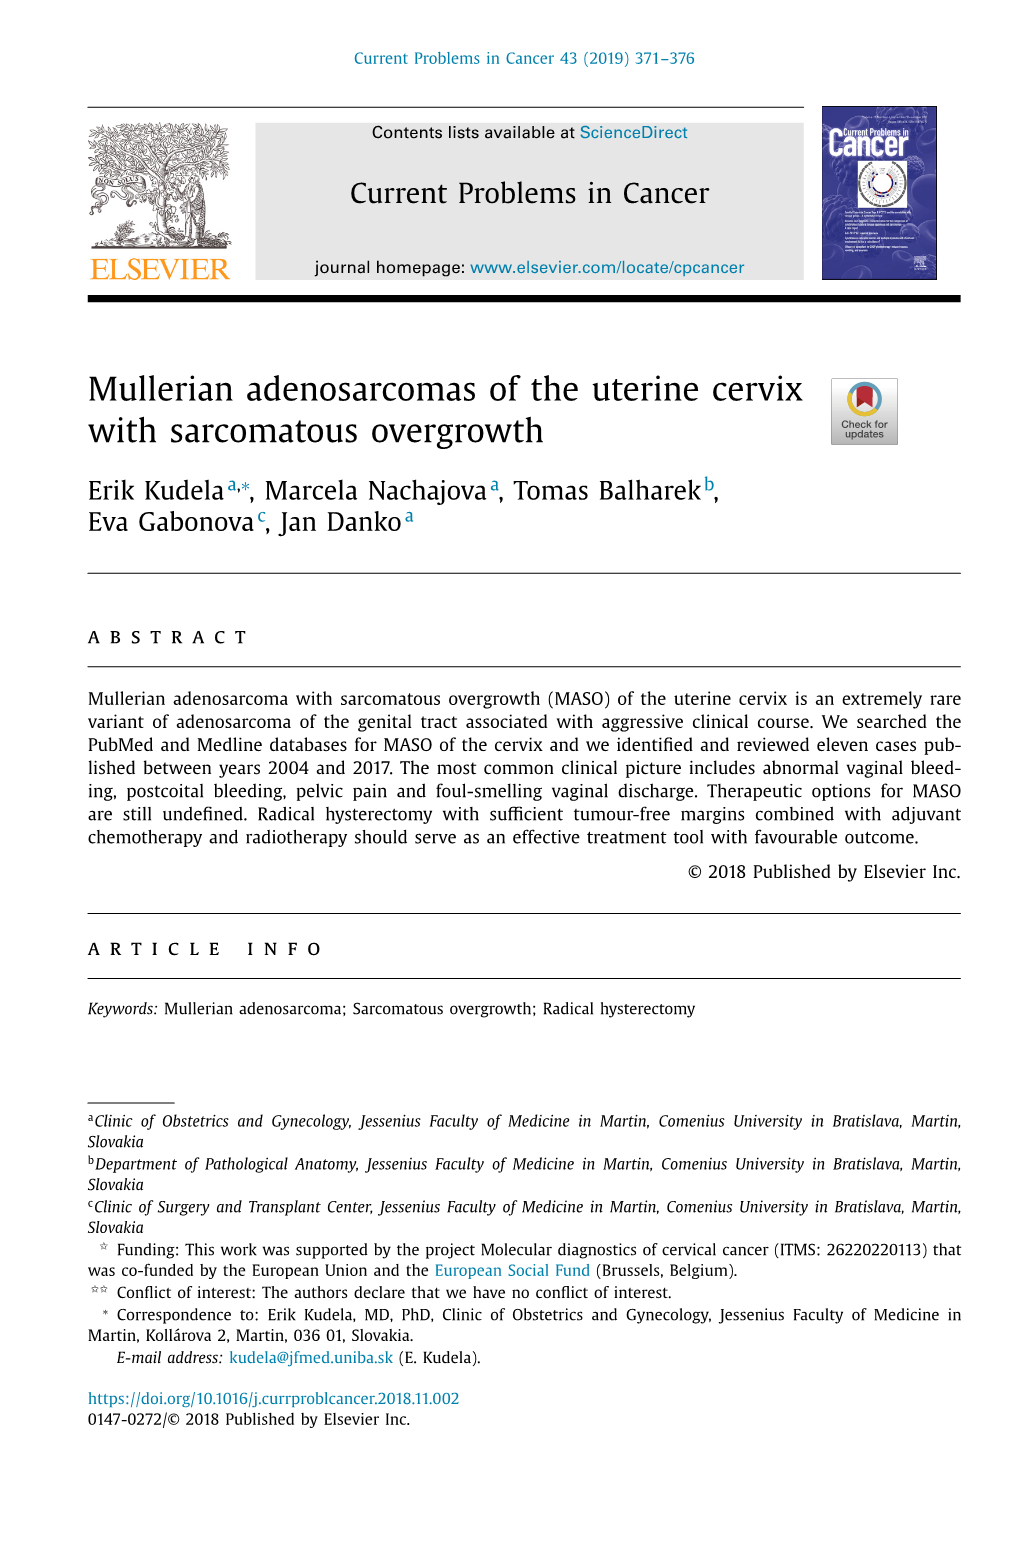 Mullerian Adenosarcomas of the Uterine Cervix with Sarcomatous Overgrowth